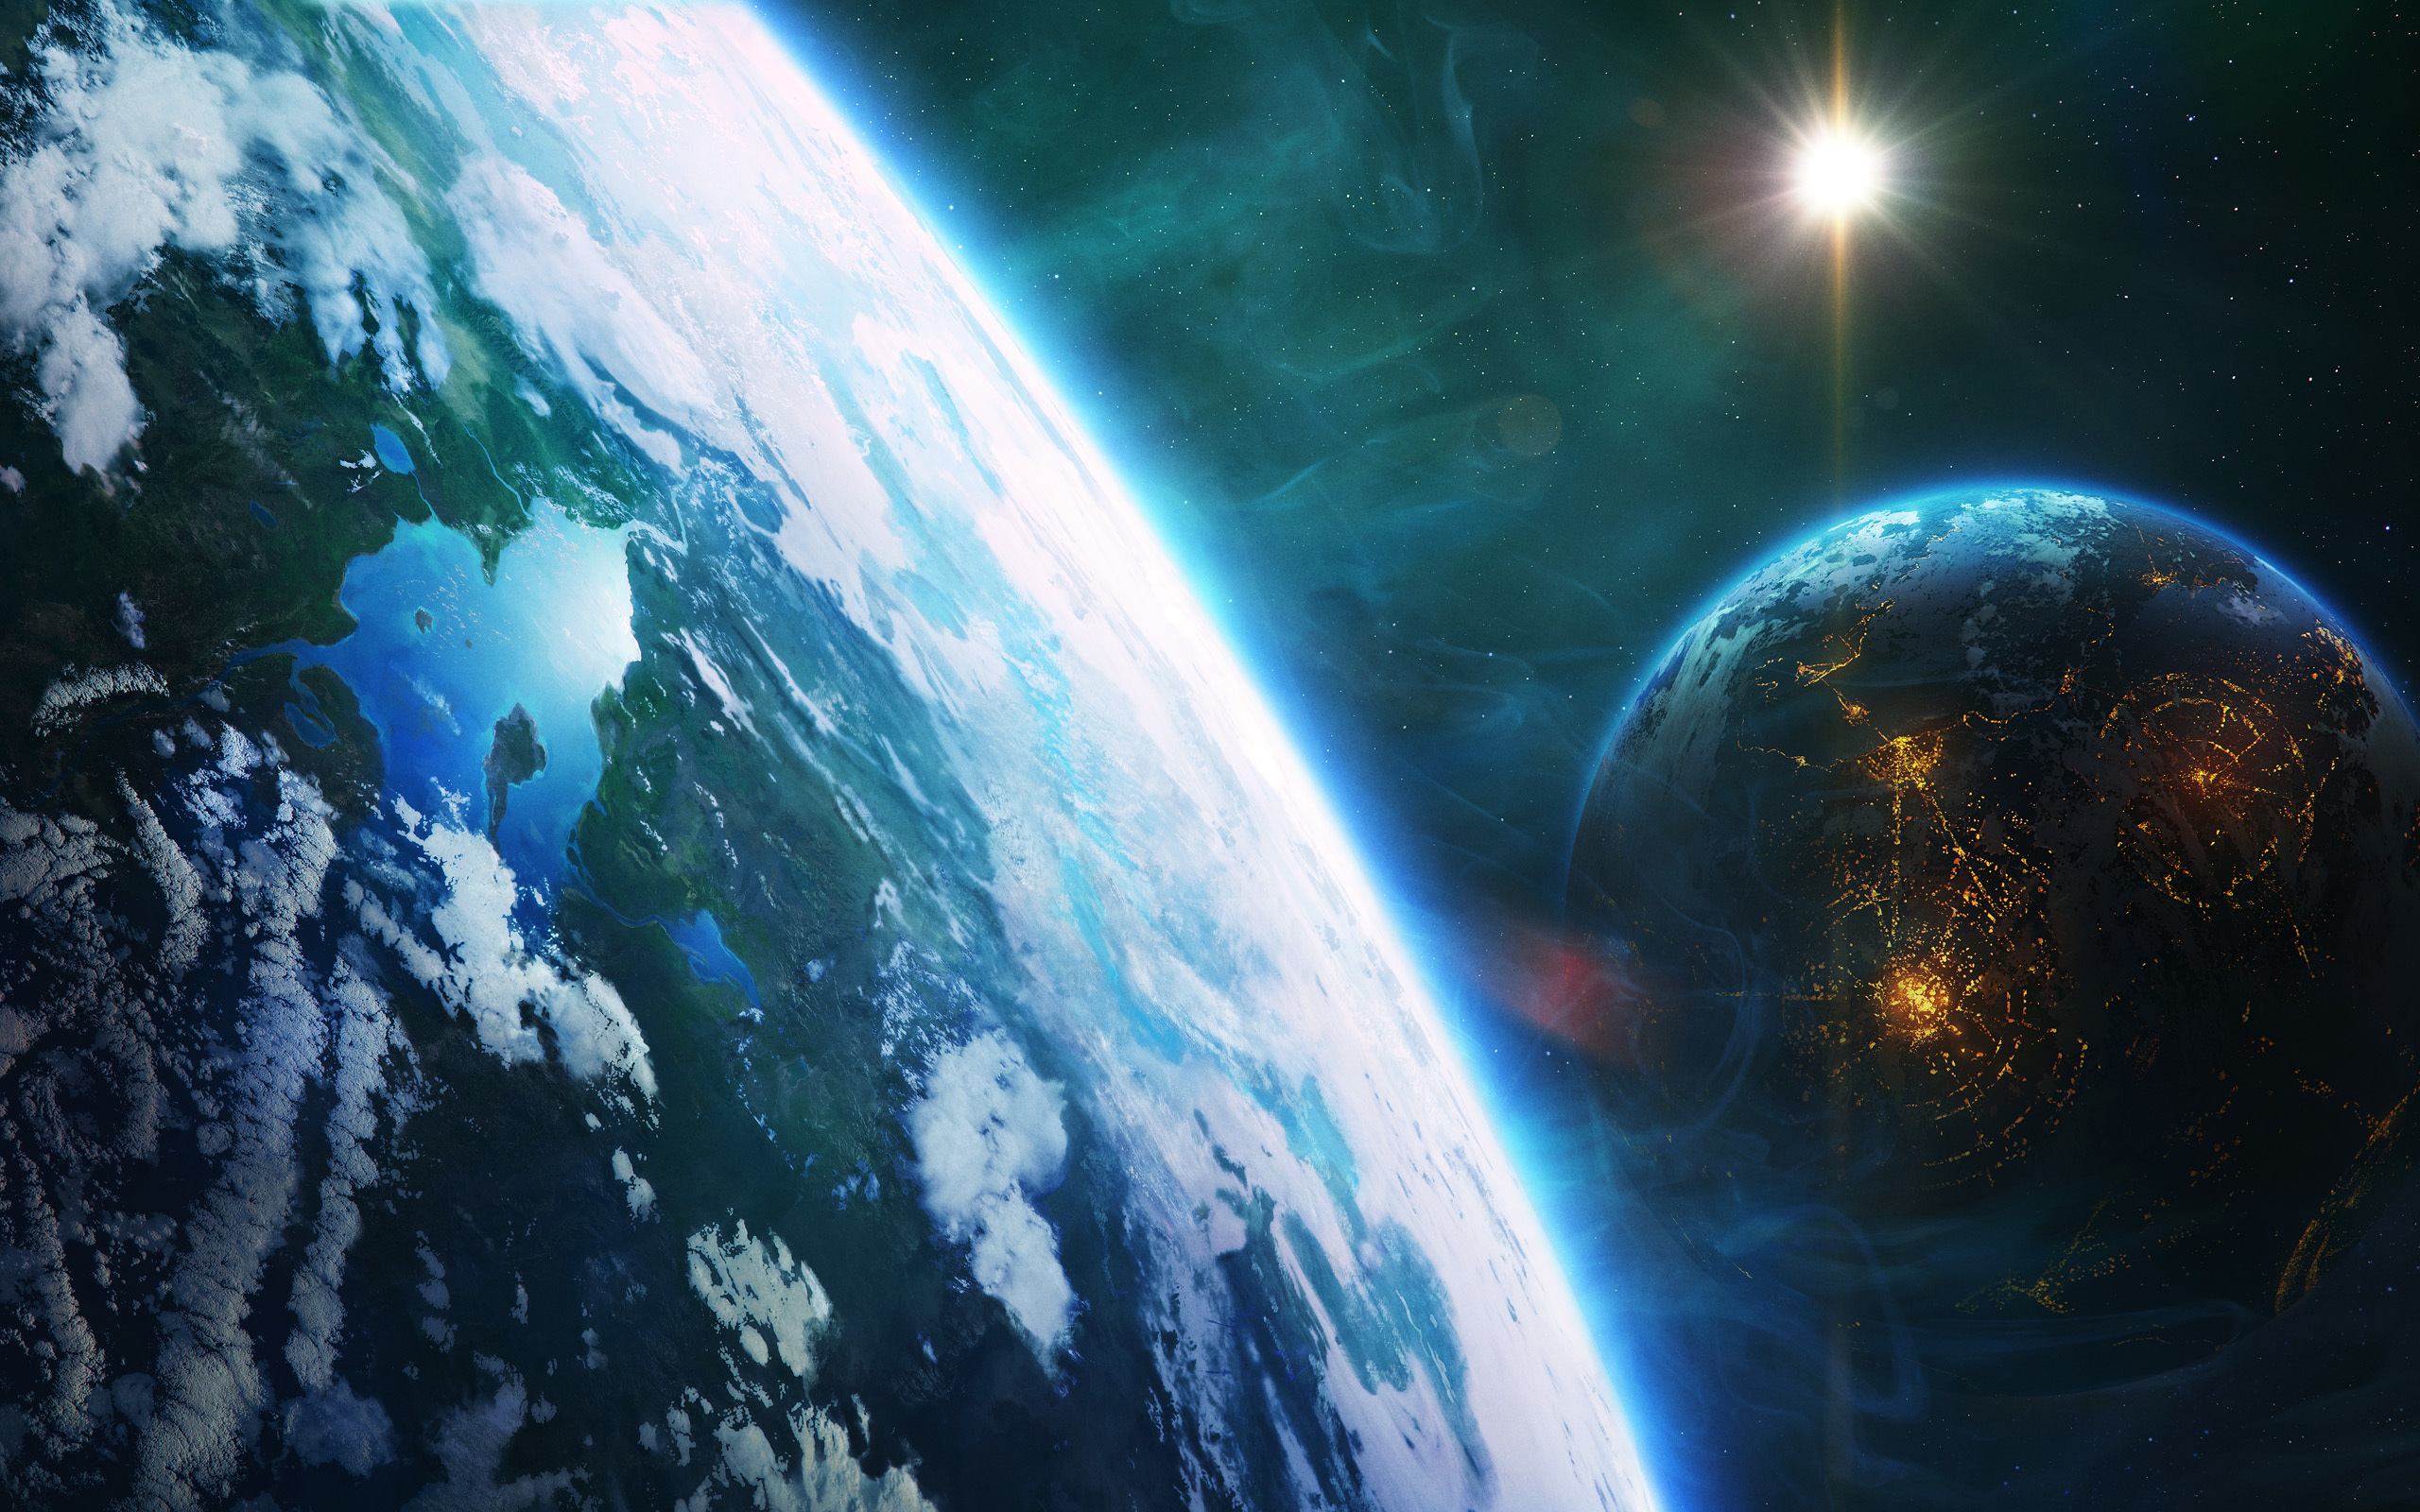 Fond d'écran Fantastic - Espace - Les 2 planètes.jpg